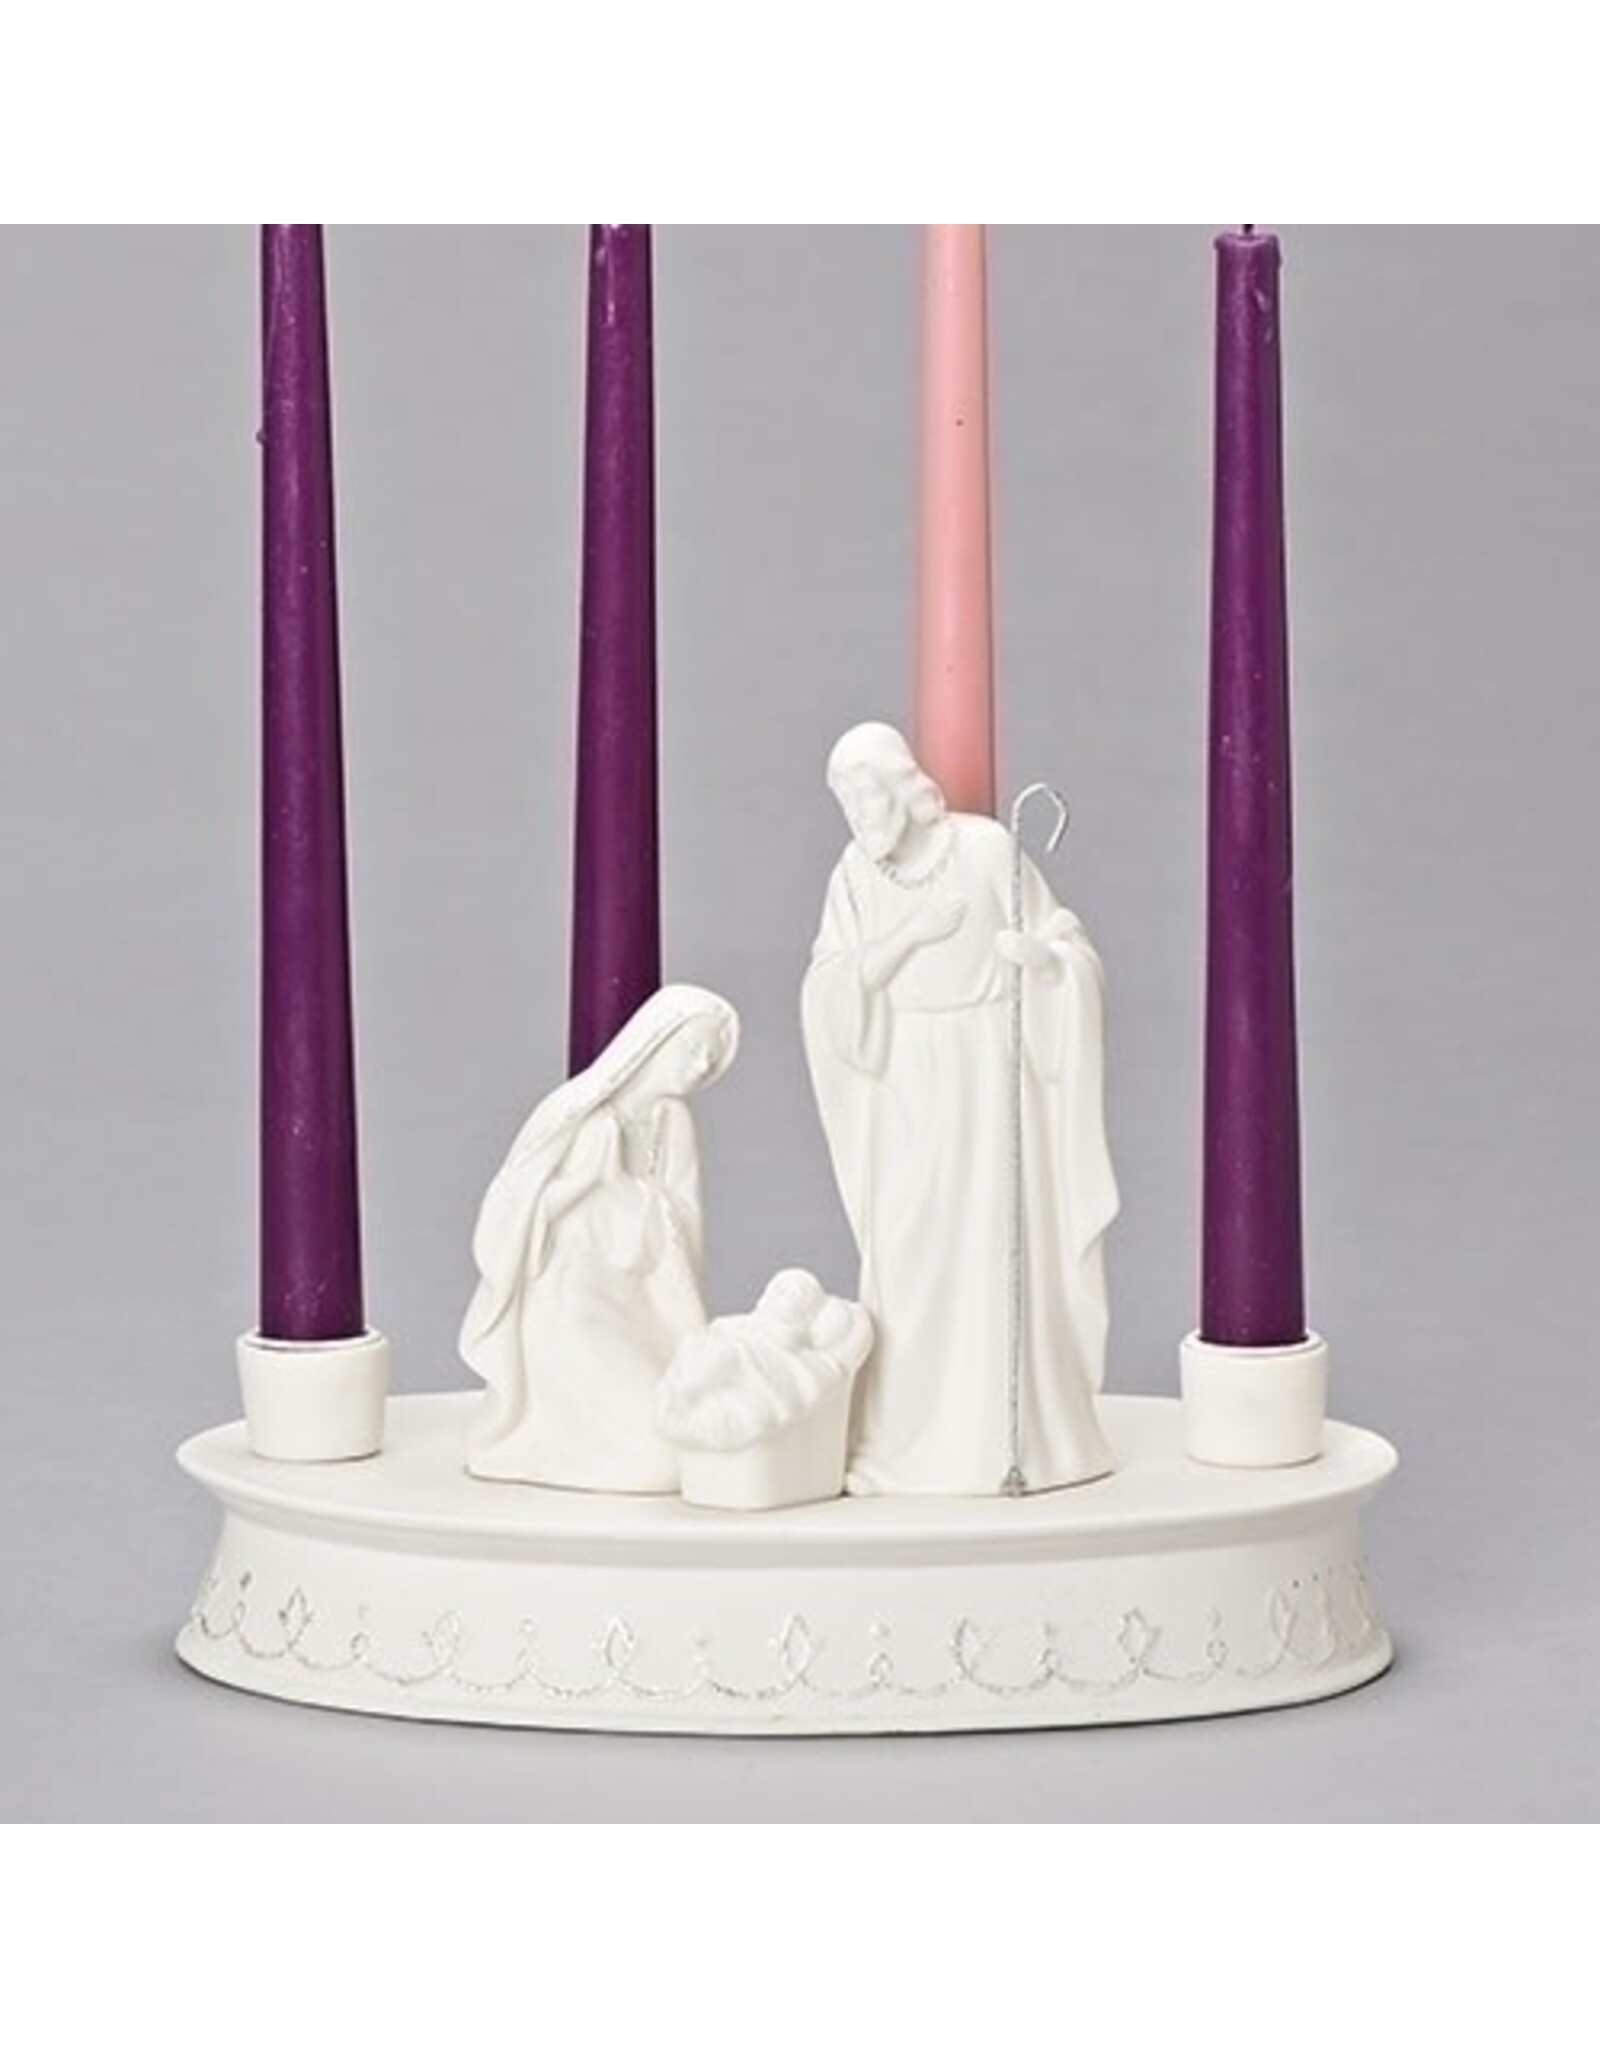 Roman Advent Wreath (Candleholder) Nativity, White